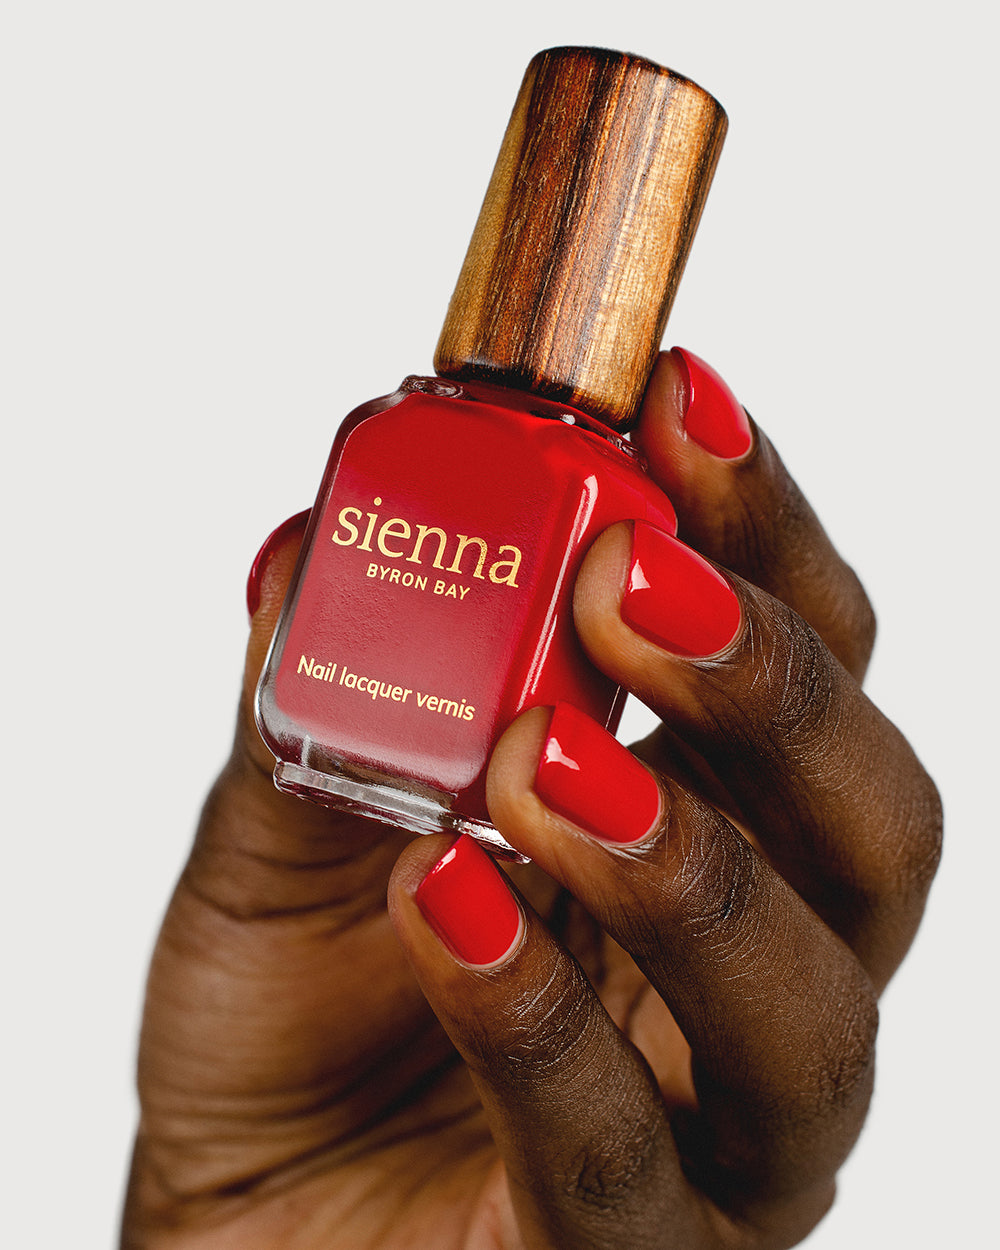 Classic red nail polish hand swatch on dark skin tone holding sienna bottle